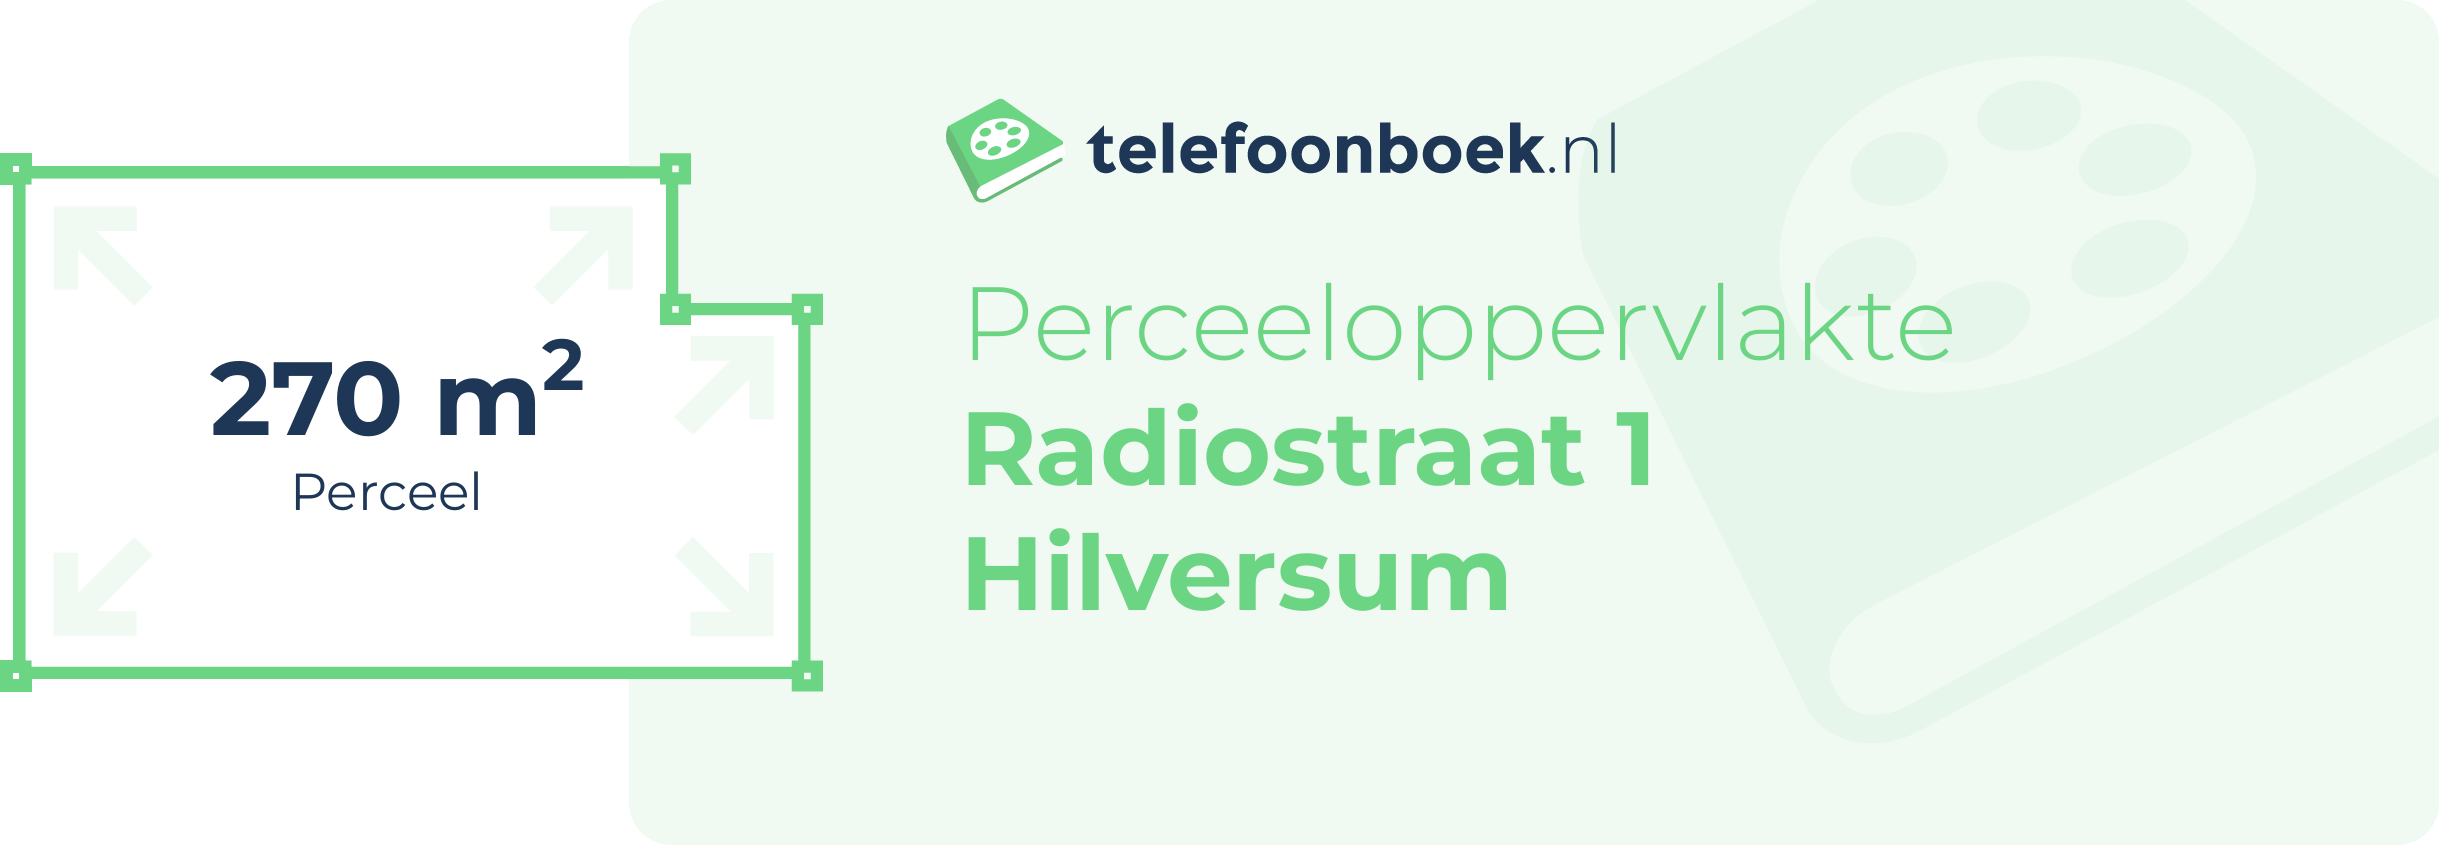 Perceeloppervlakte Radiostraat 1 Hilversum